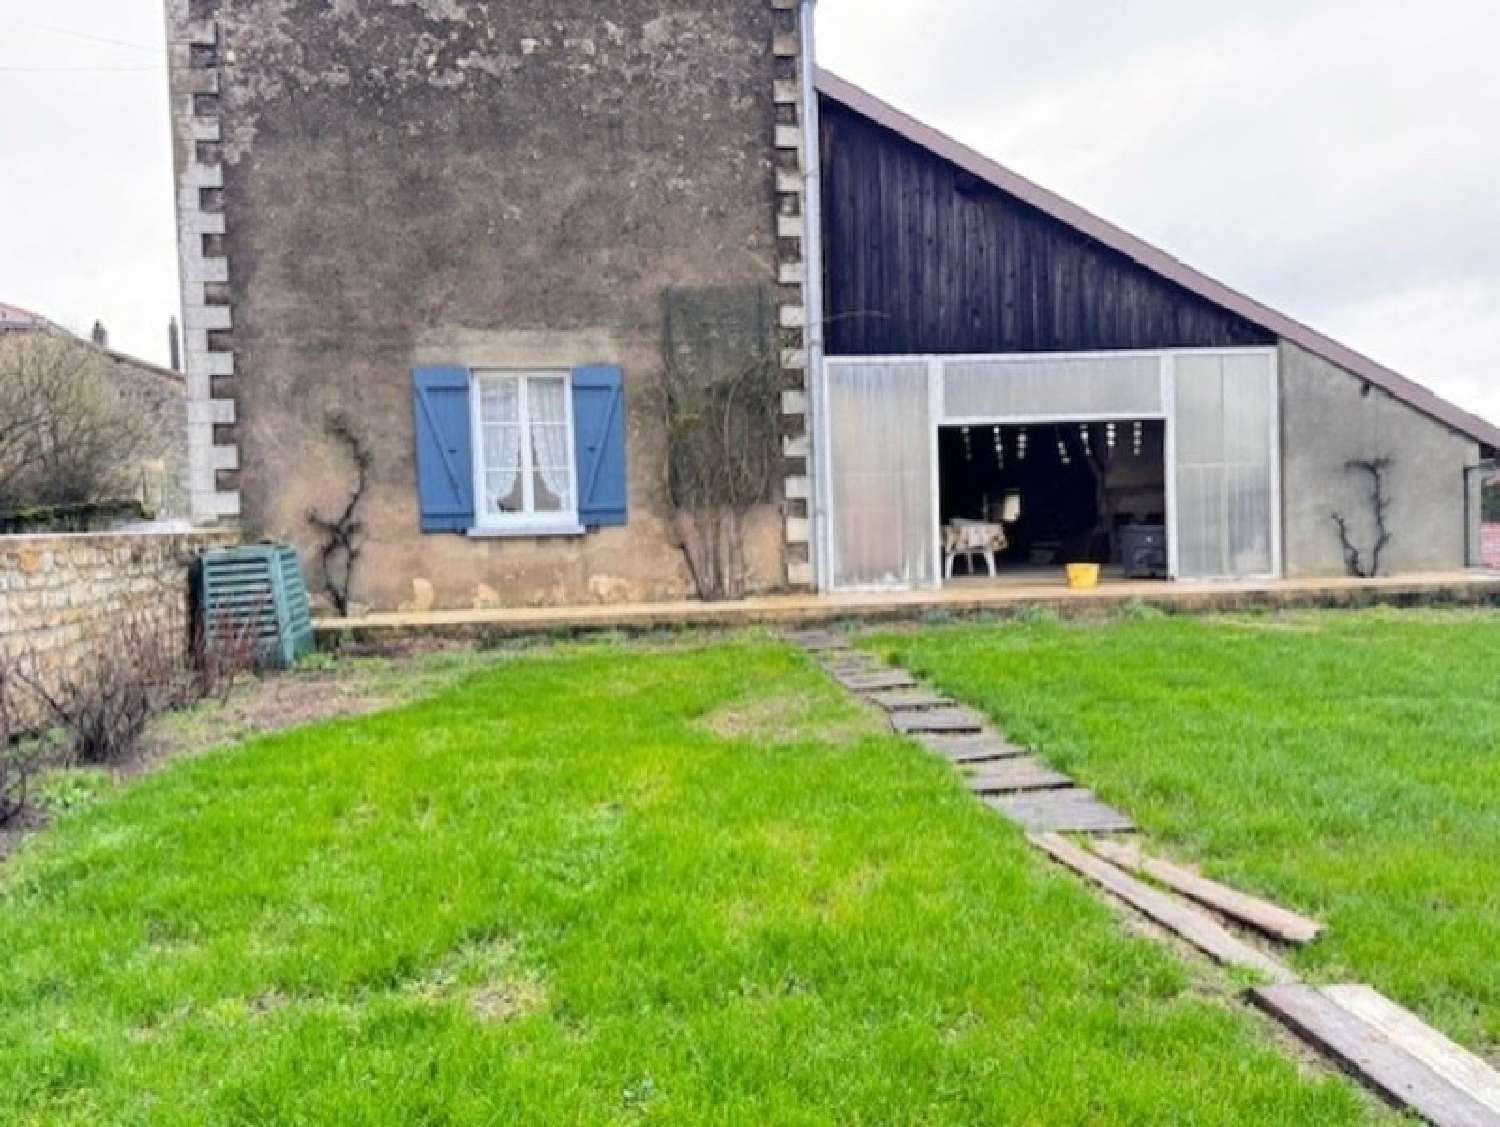  à vendre ferme Luzy-Saint-Martin Meuse 8